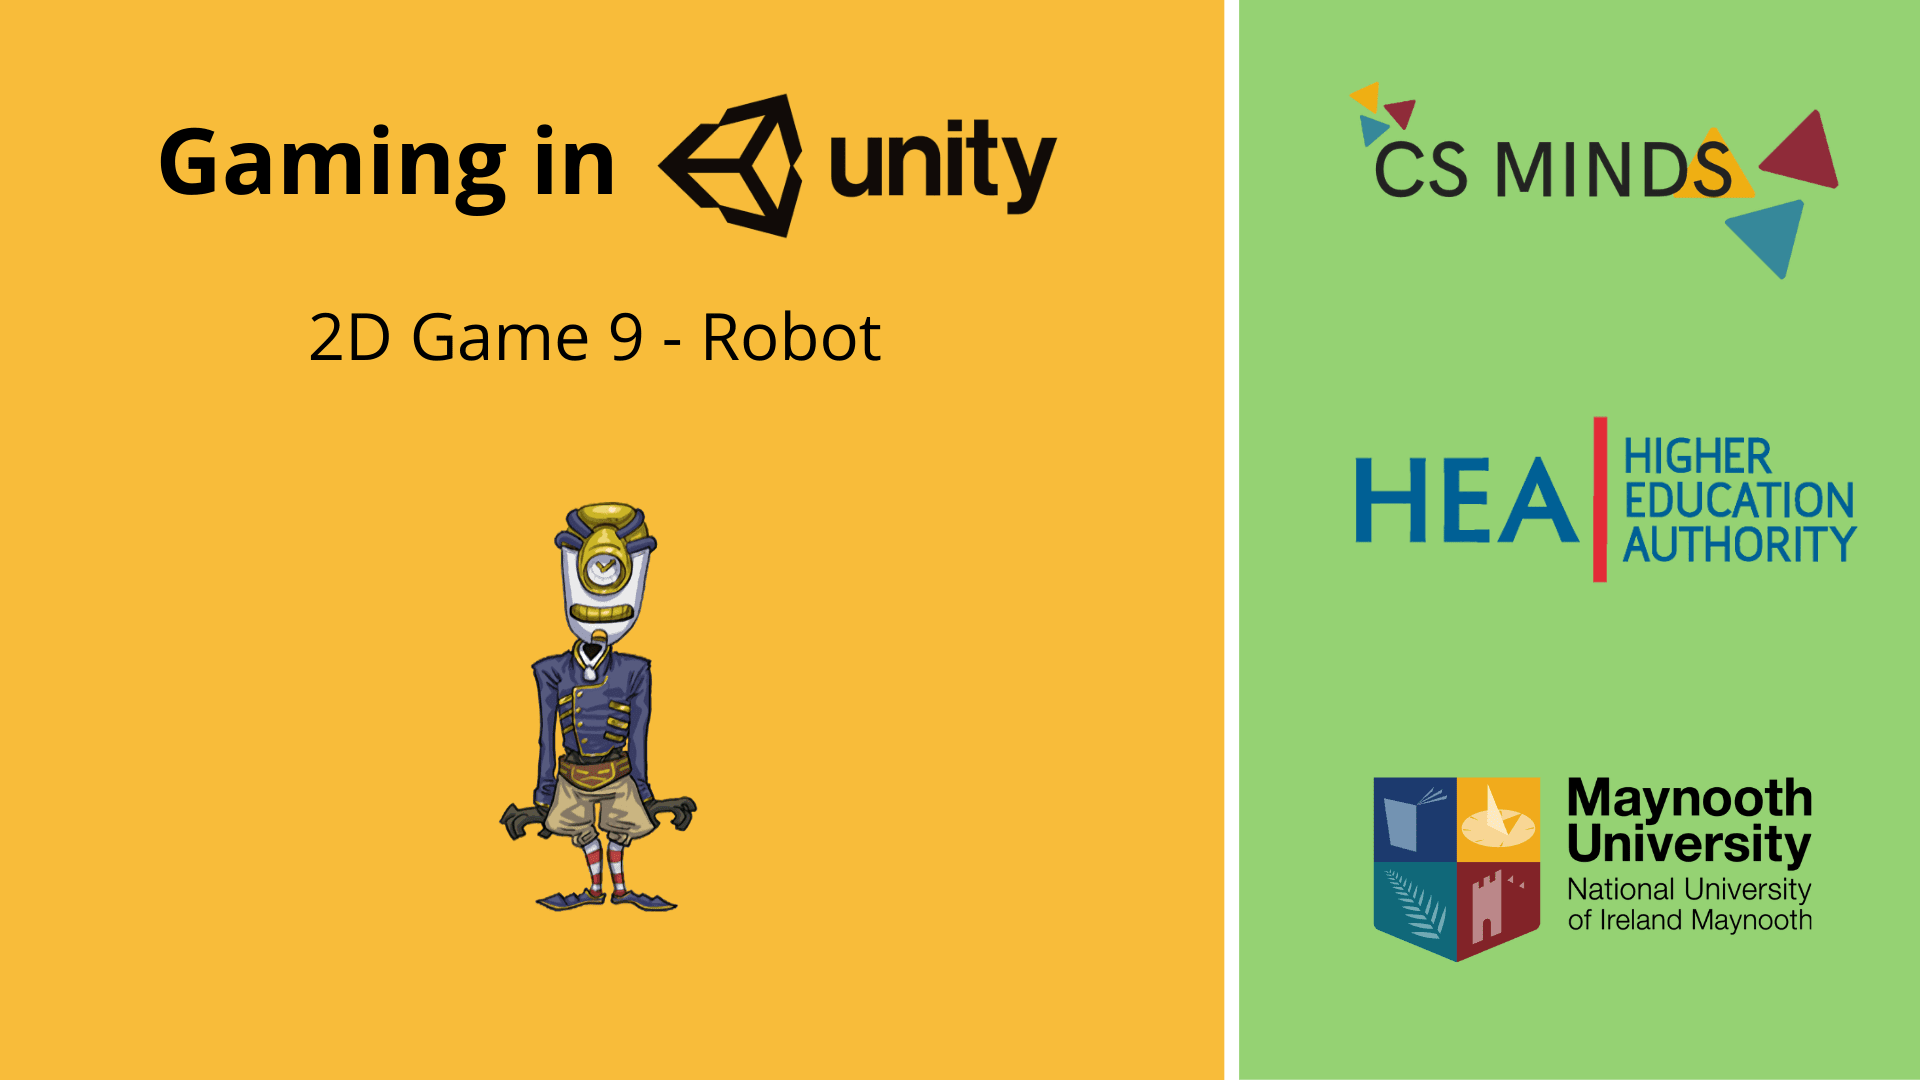 (../img/unity-13-2d-game-9-robot/2d-game-9-robot-header.png)